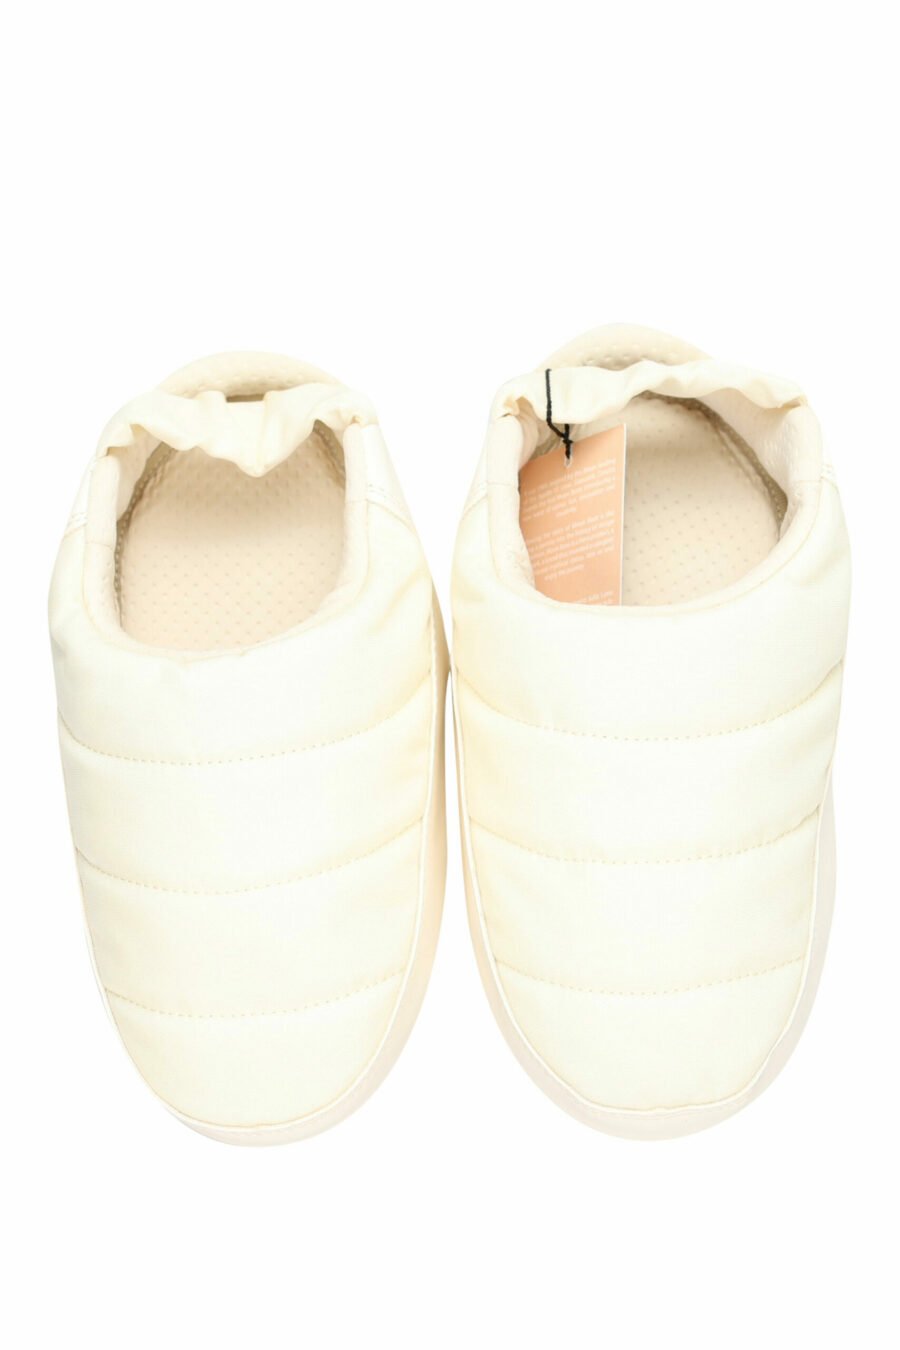 Sandalias blancas con minilogo blanco - 8050032004080 5 scaled